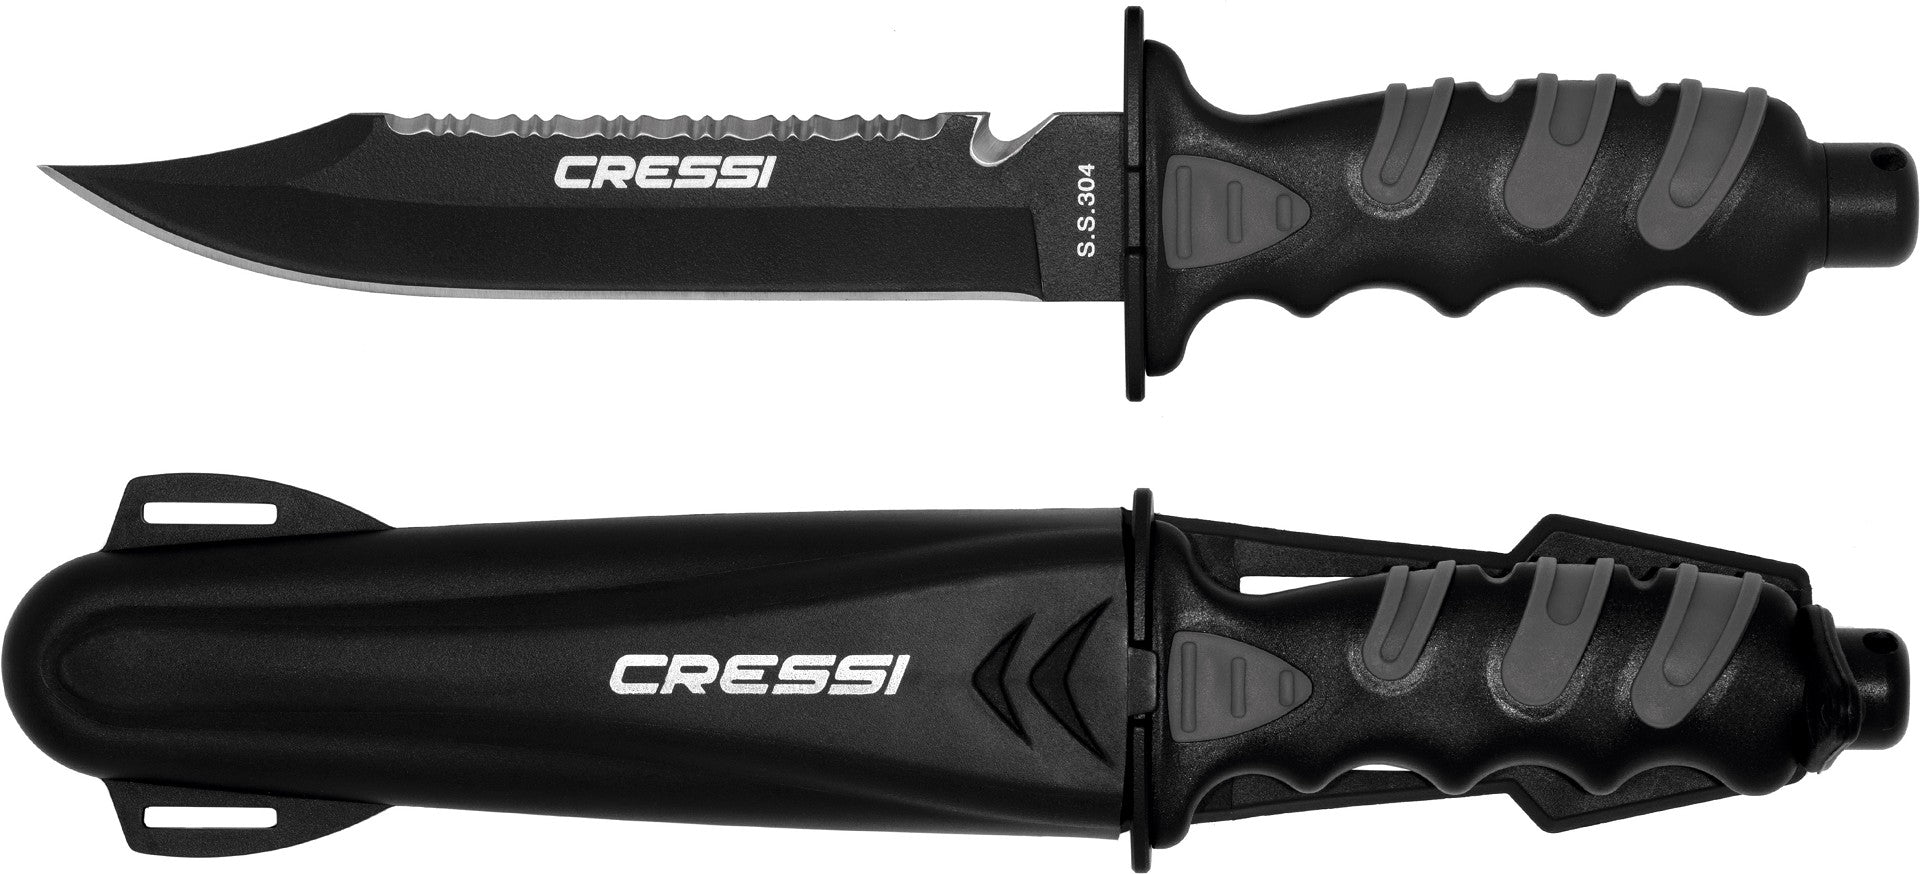 Cressi Alligator - Scissor/Knife